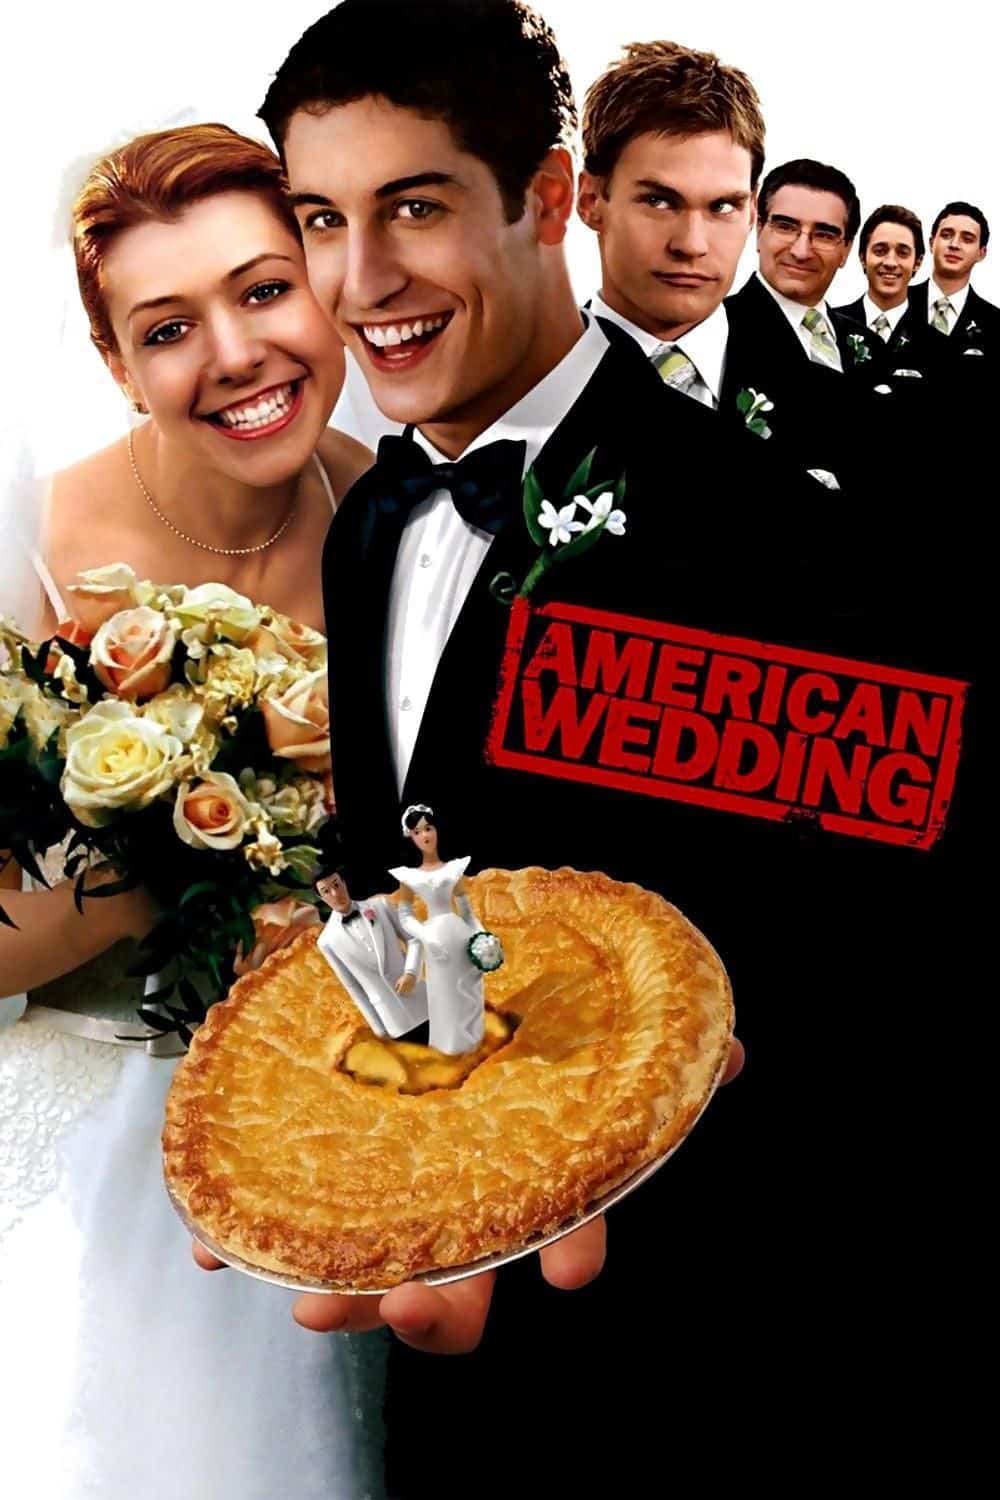 American Wedding, 2003 